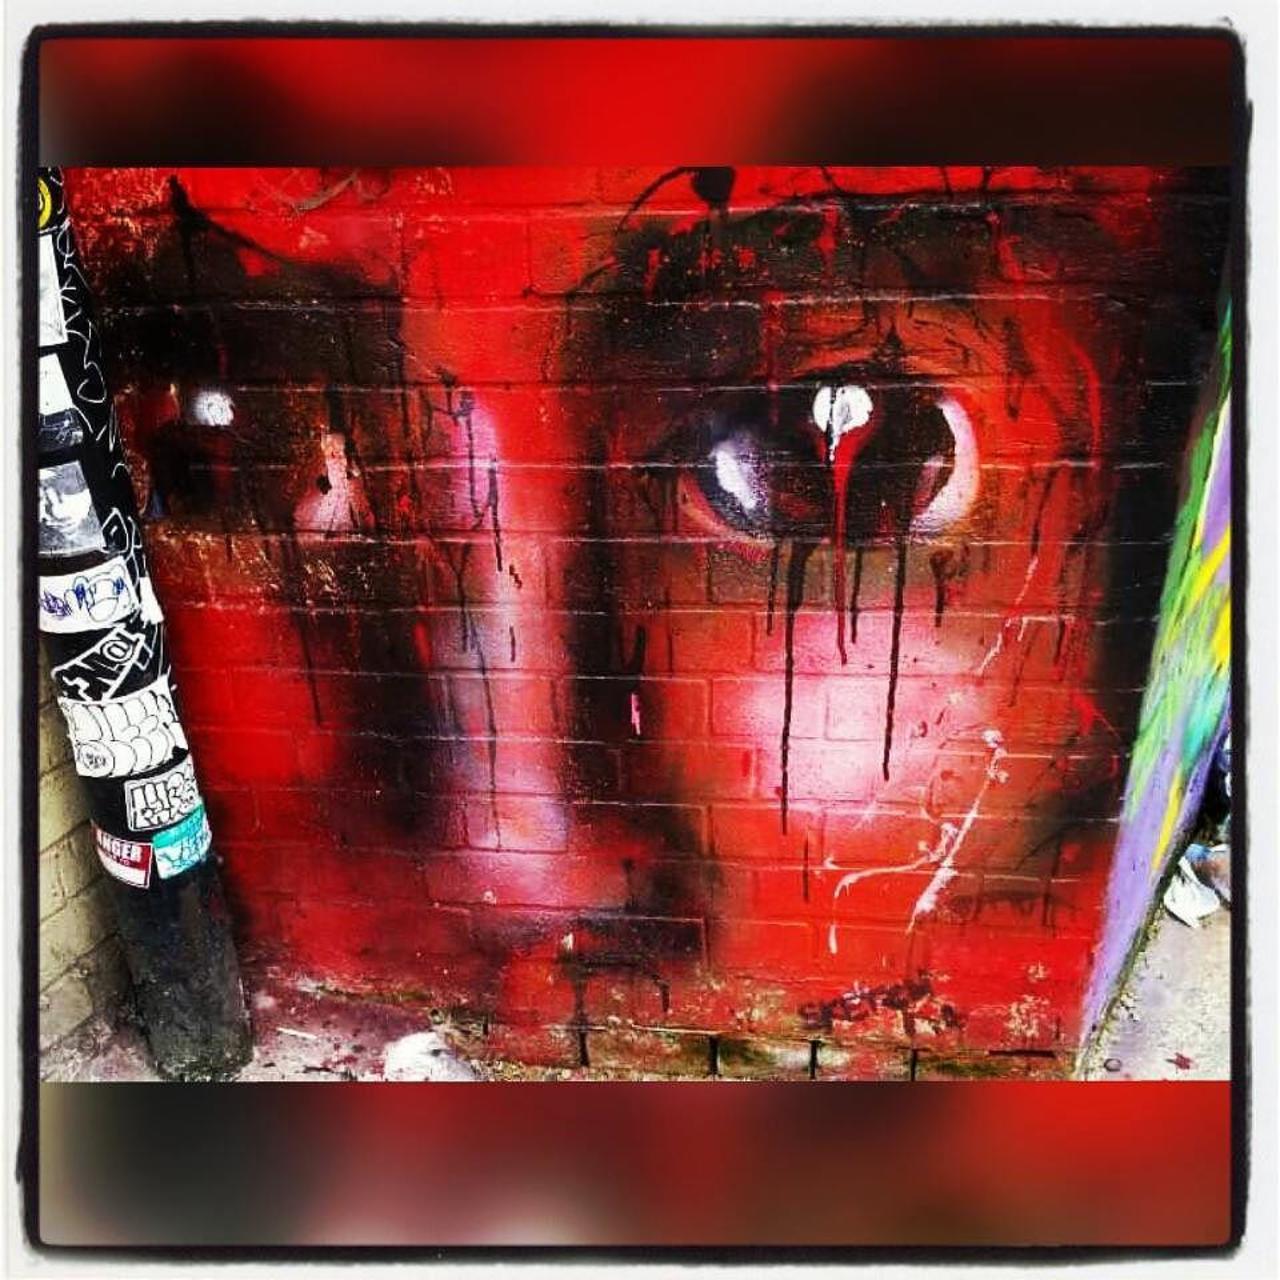 #streetart #london #red #face #eyes #wall #england #londonstreetart #street #art #streetartlondon #graffiti #stenci… http://t.co/RwyilfNZd9